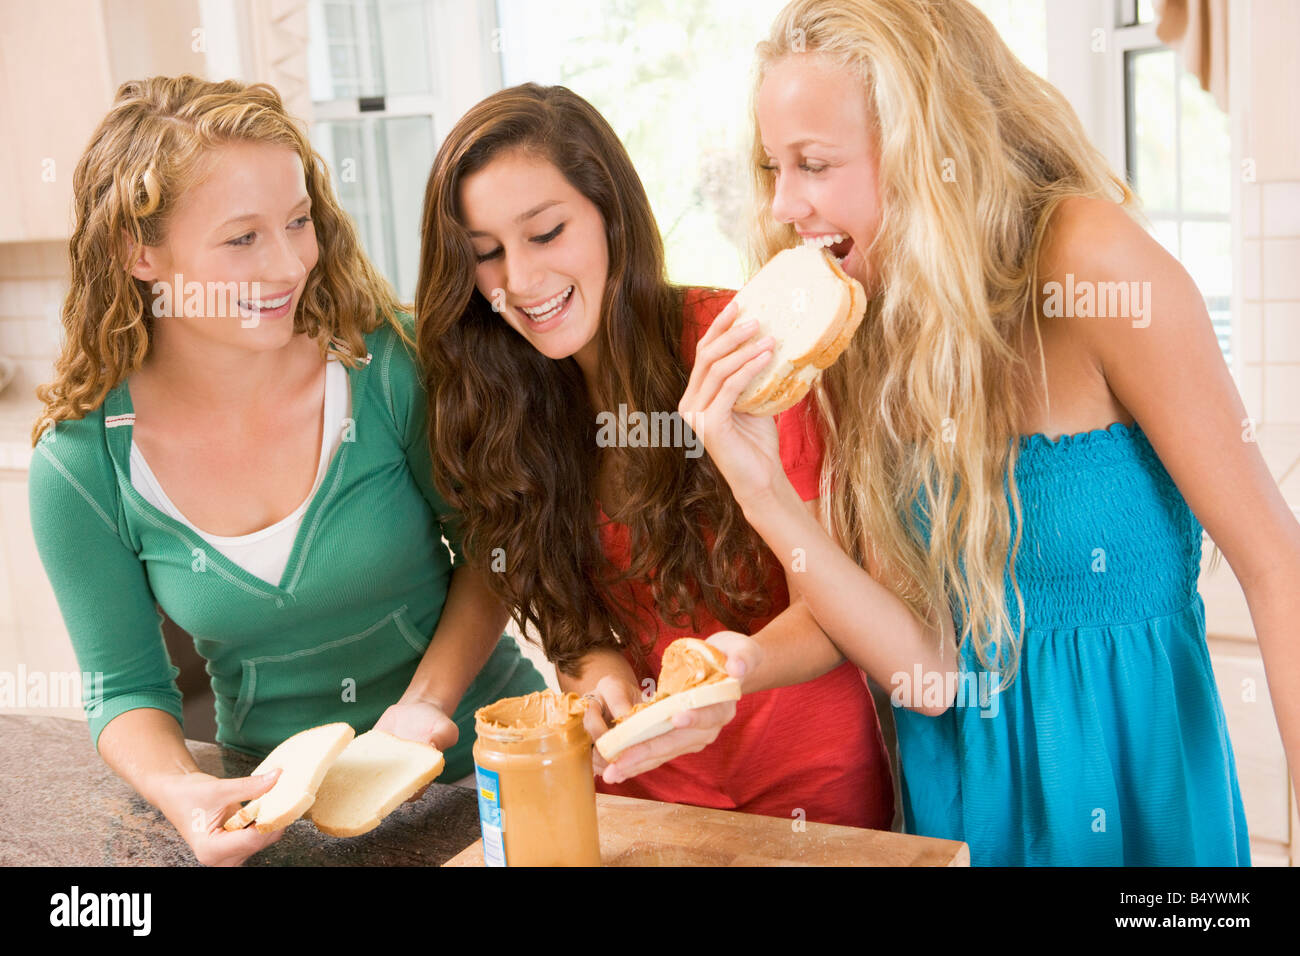 Teenage Girls Making Sandwiches Stock Photo